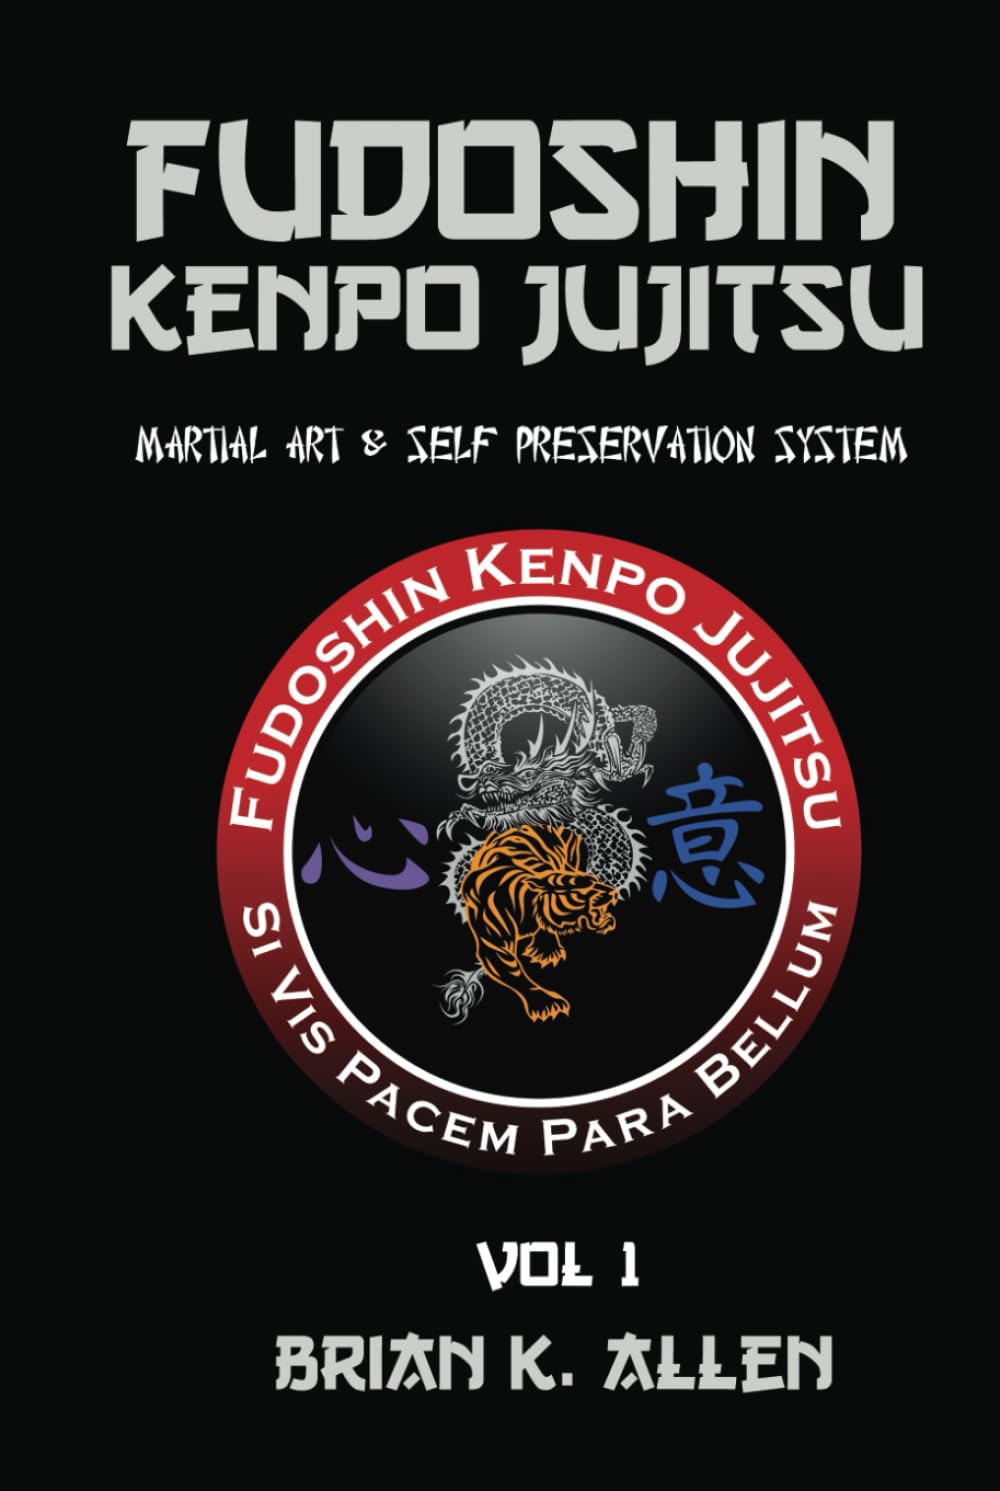 Fudoshin Kenpo Jujitsu: Martial Art & Self Preservation System